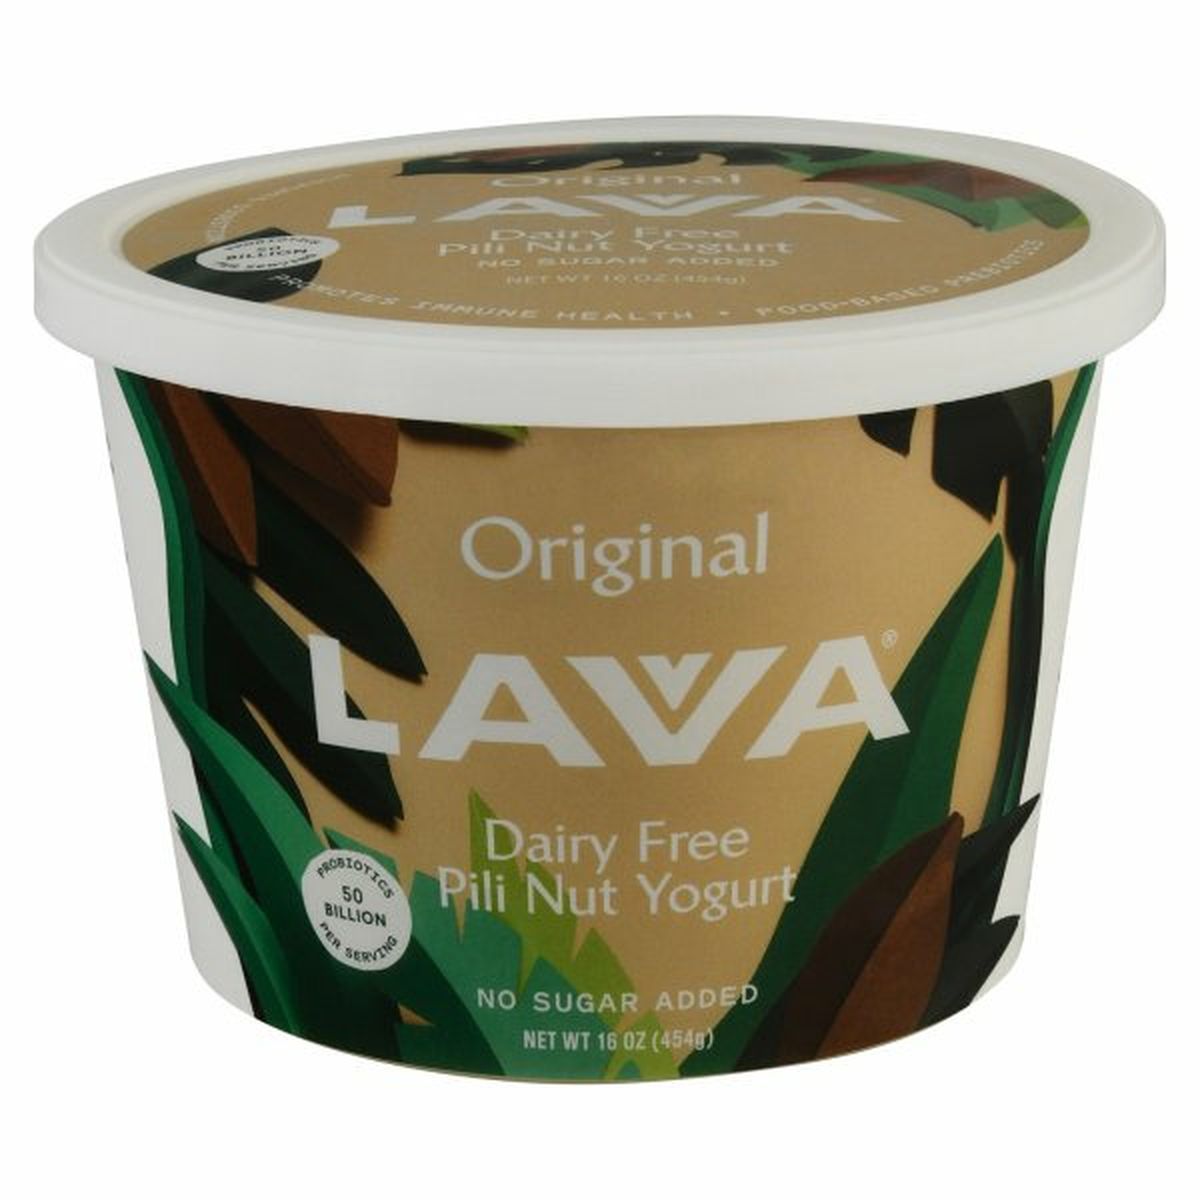 Calories in Lavva Yogurt, Original, Pili Nut